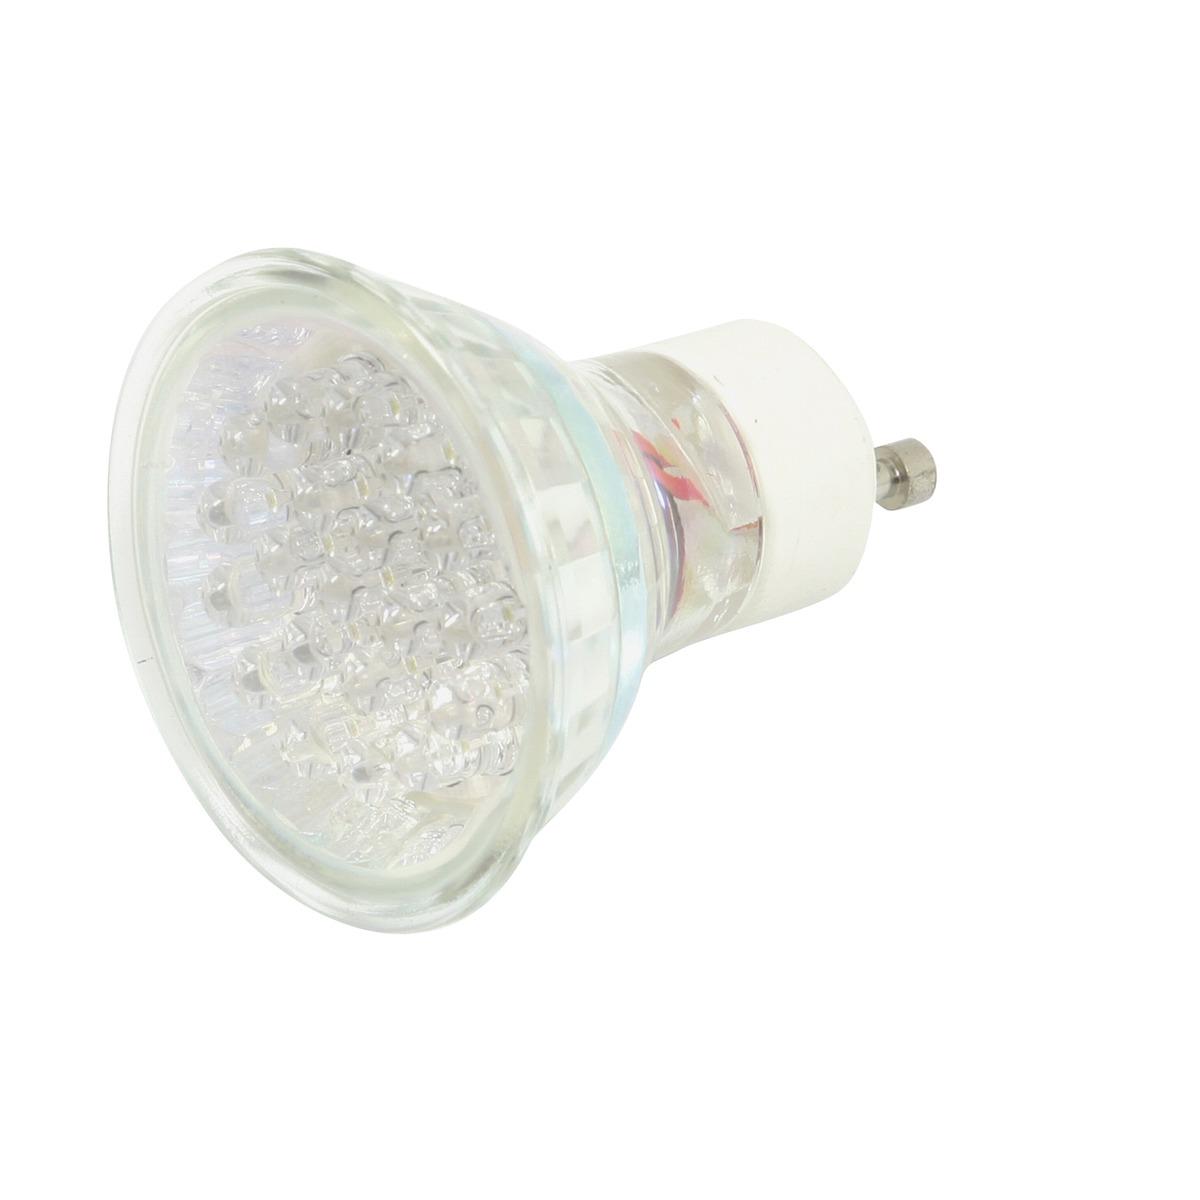 Ampoule spot 20 LED GU10 - 12 x 5 x 15 cm - Blanc